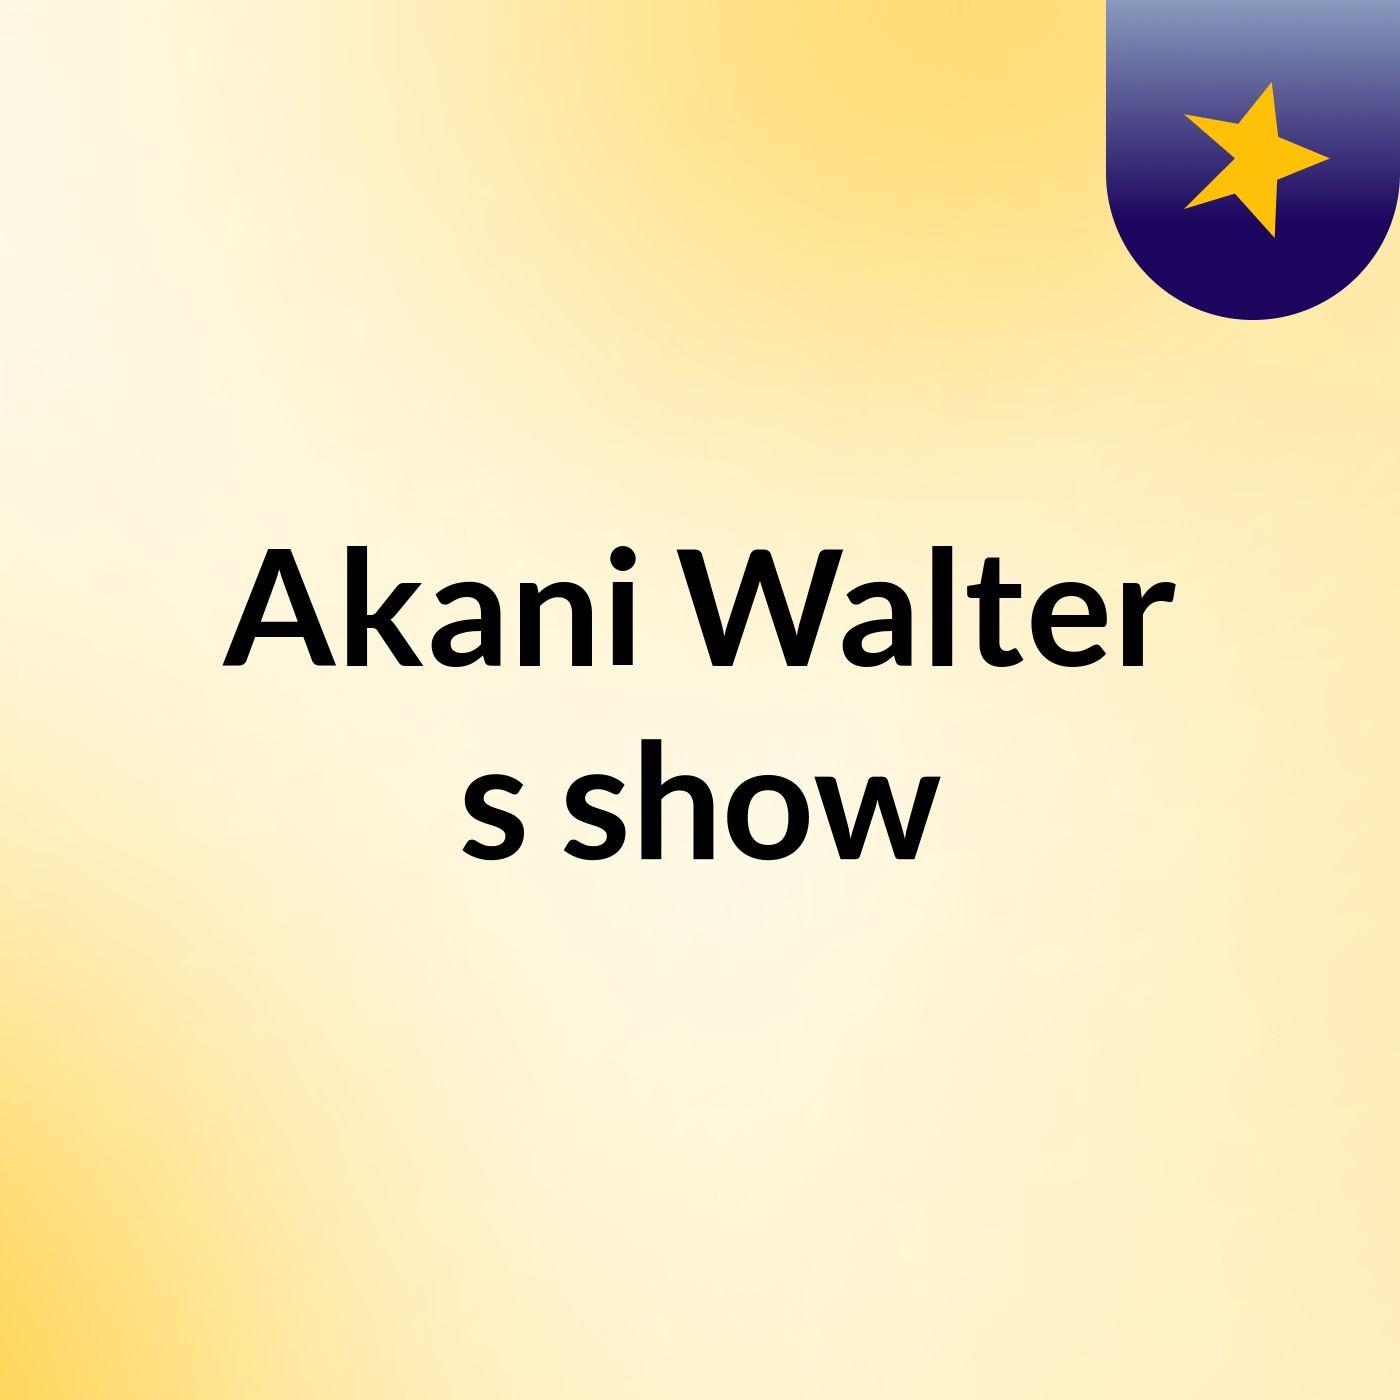 Akani Walter's show